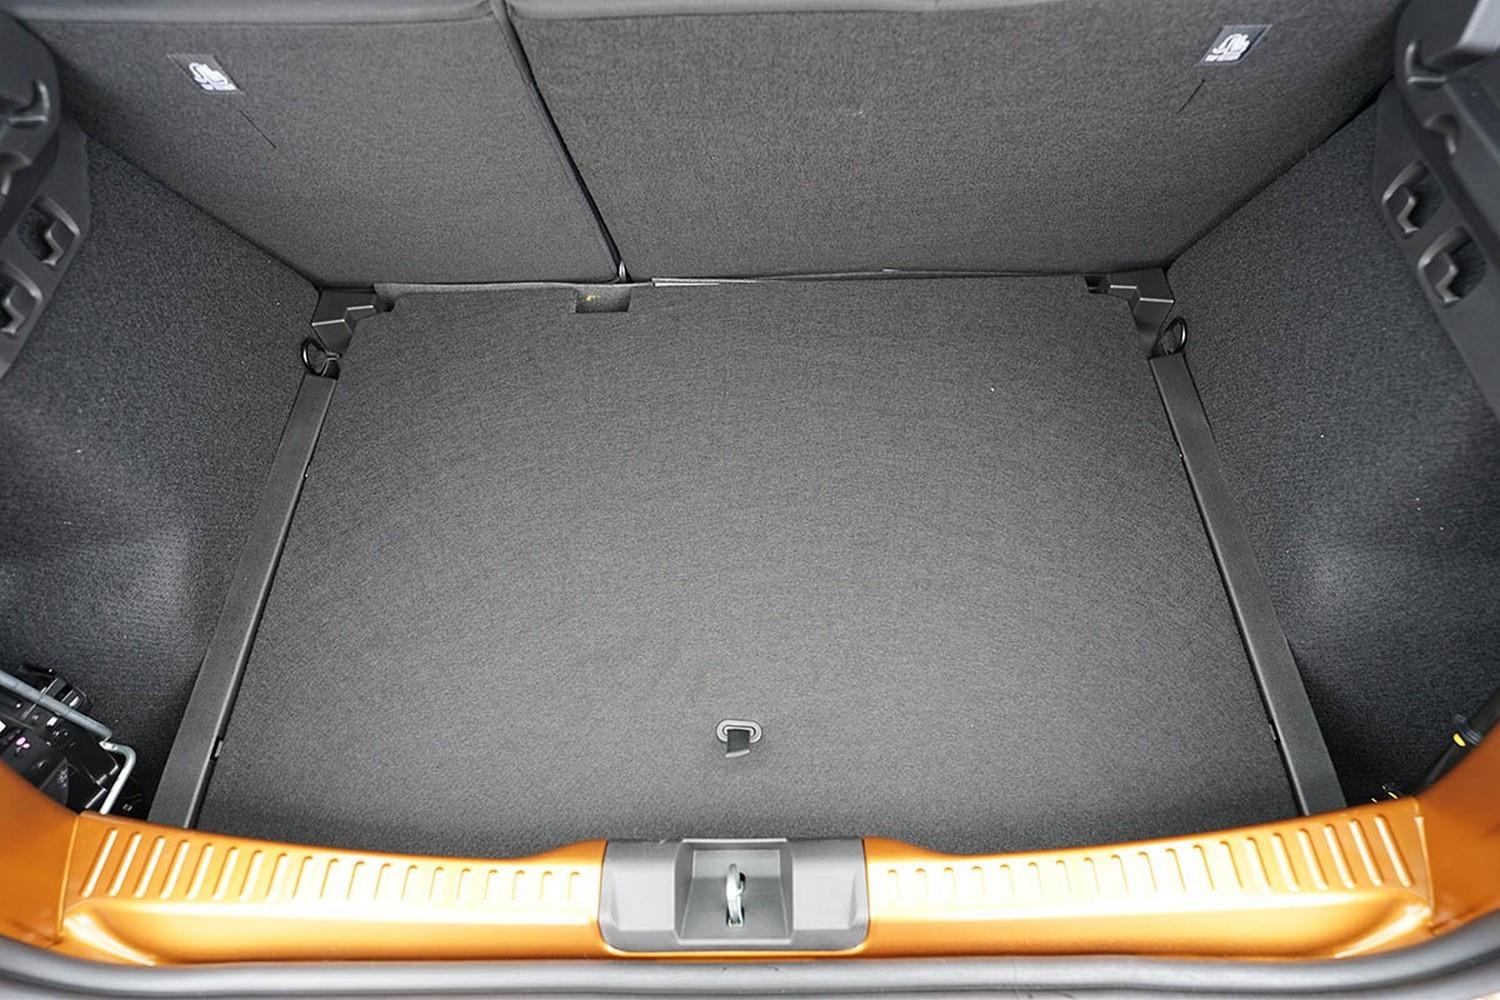 https://www.petwareshop.com/images/stories/virtuemart/product/dac4satm-dacia-sandero-iii-2020-5-door-hatchback-cool-liner-anti-slip-pe-tpe-rubber-4.jpg